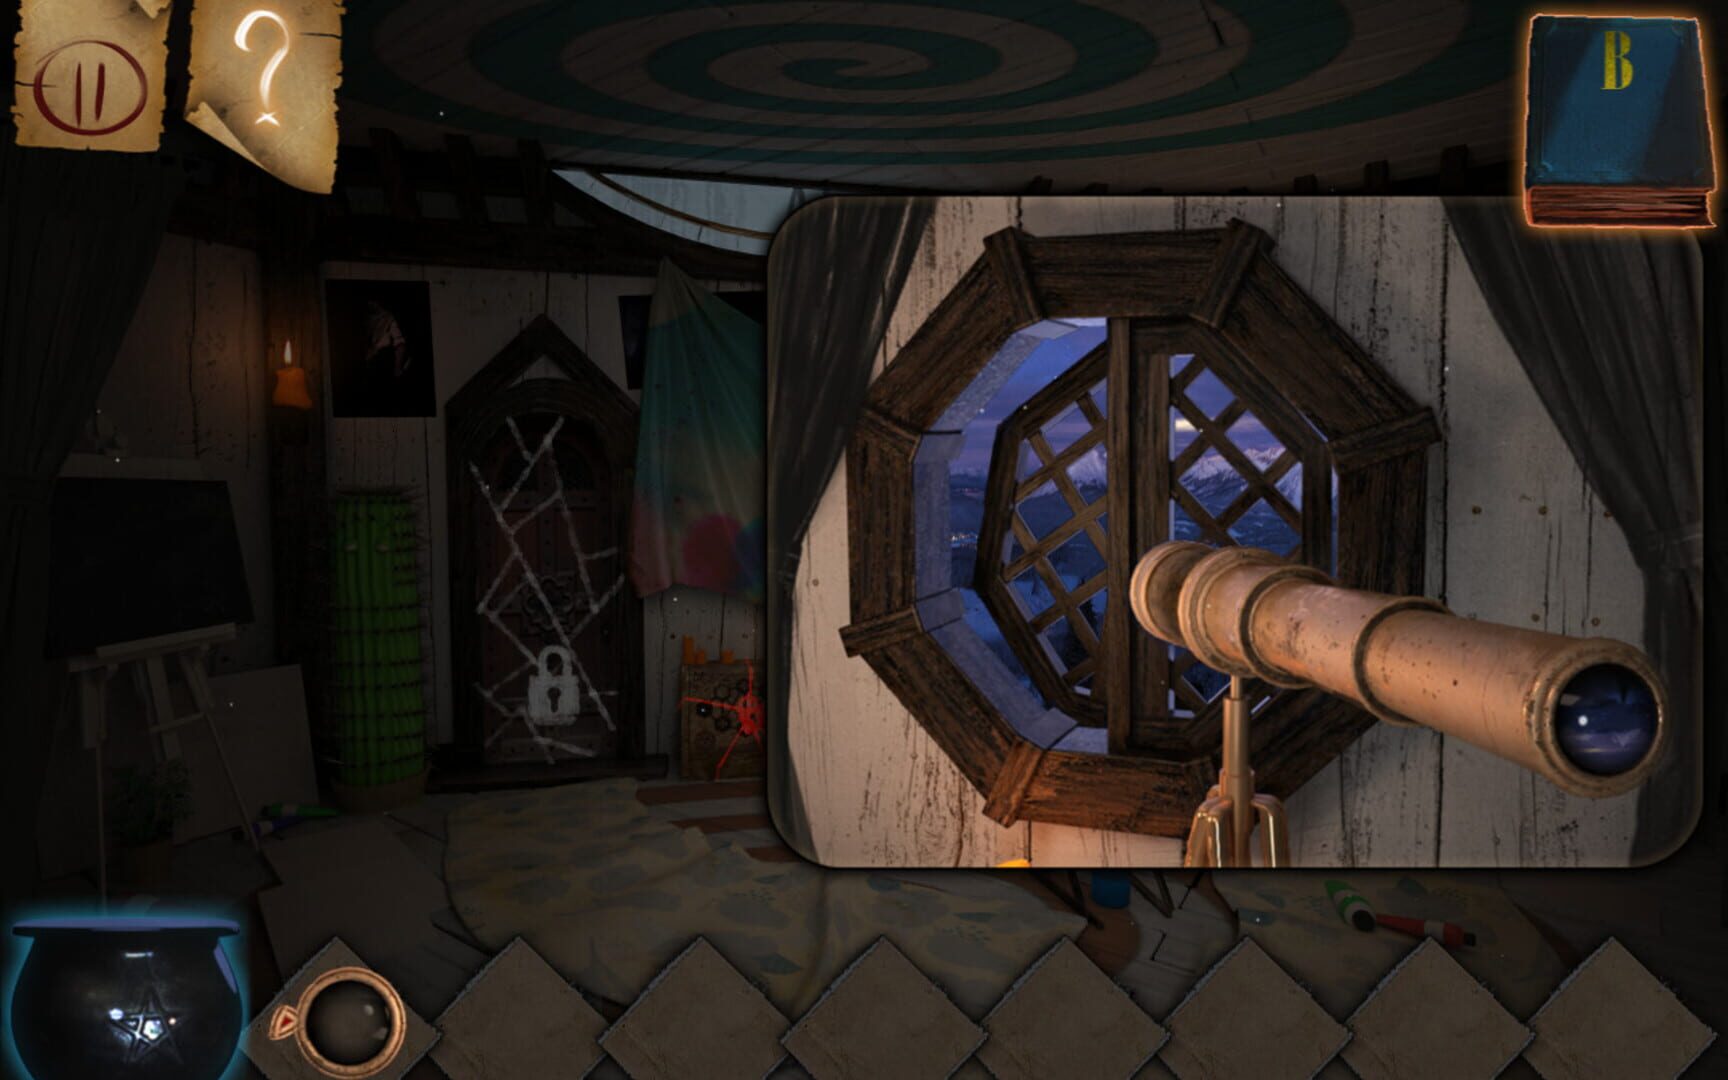 The Tower of Beatrice screenshot